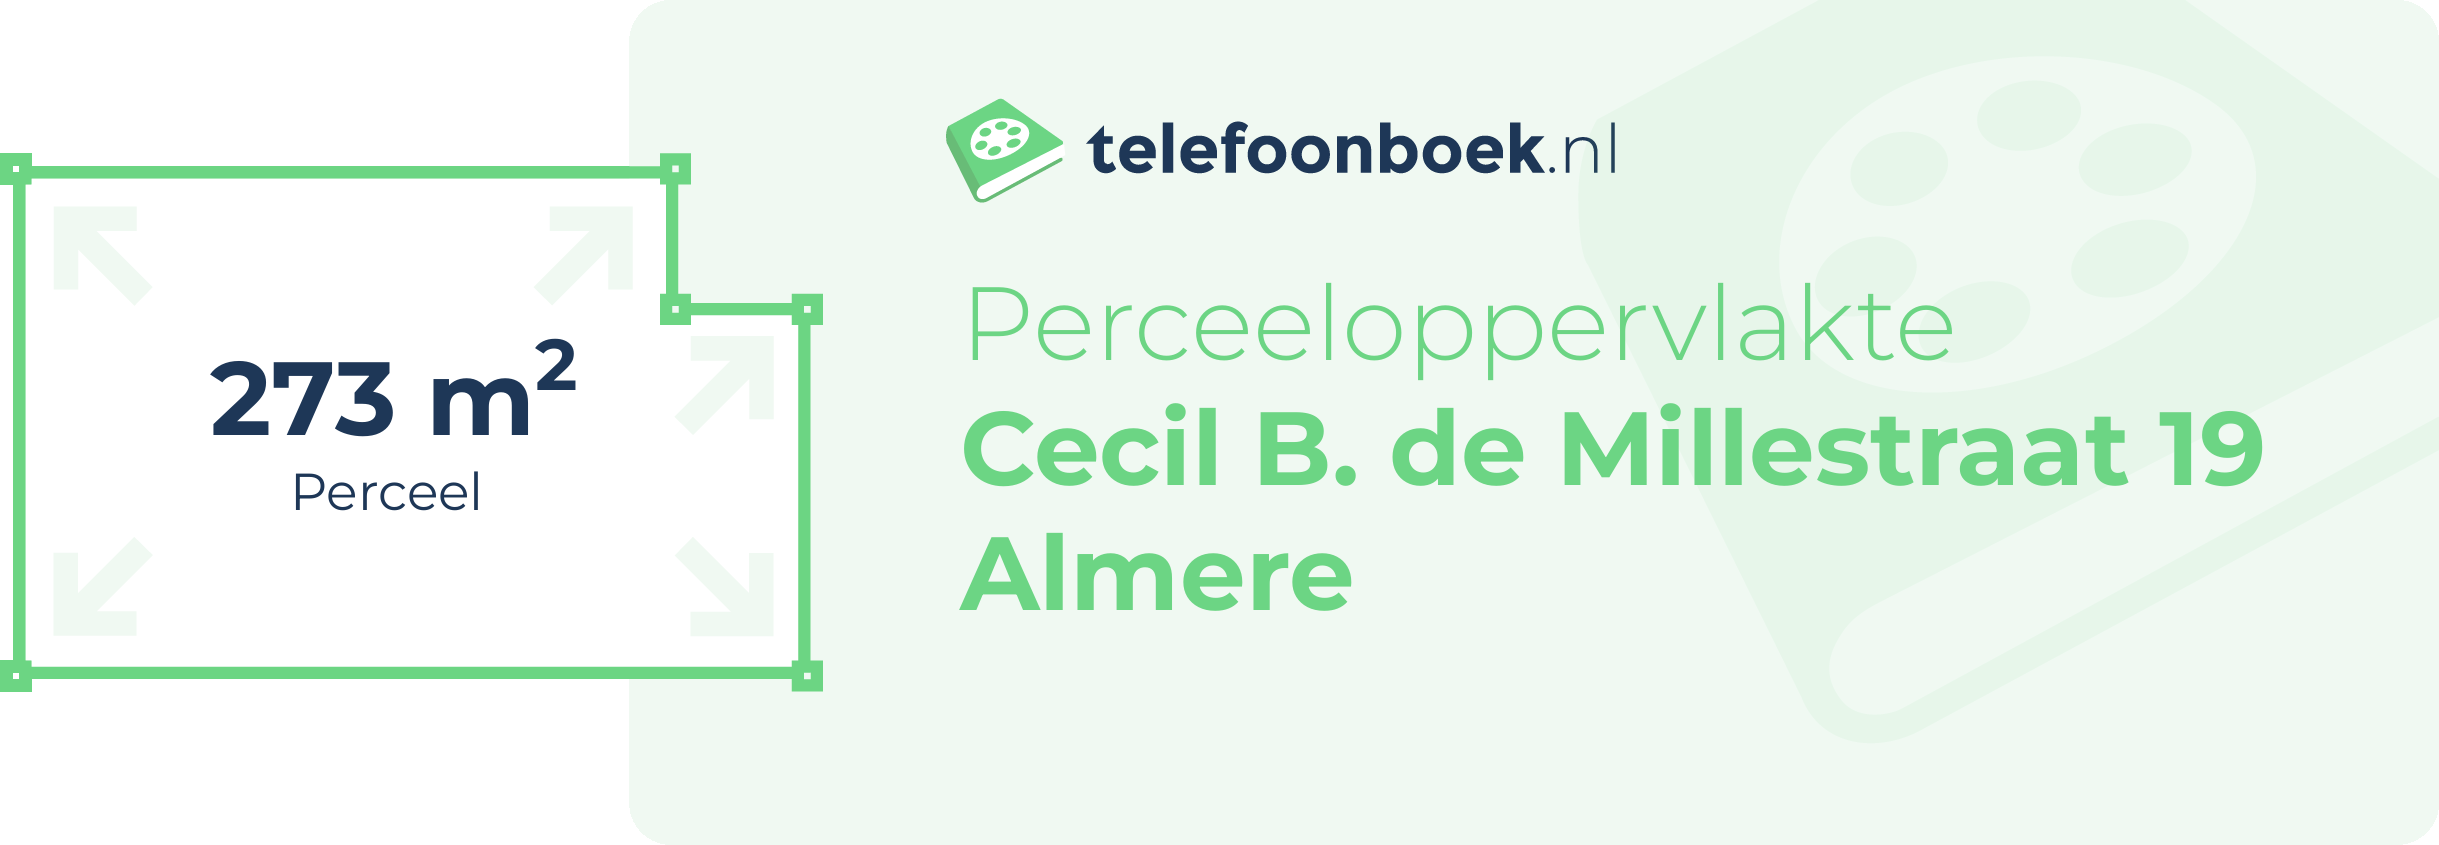 Perceeloppervlakte Cecil B. De Millestraat 19 Almere